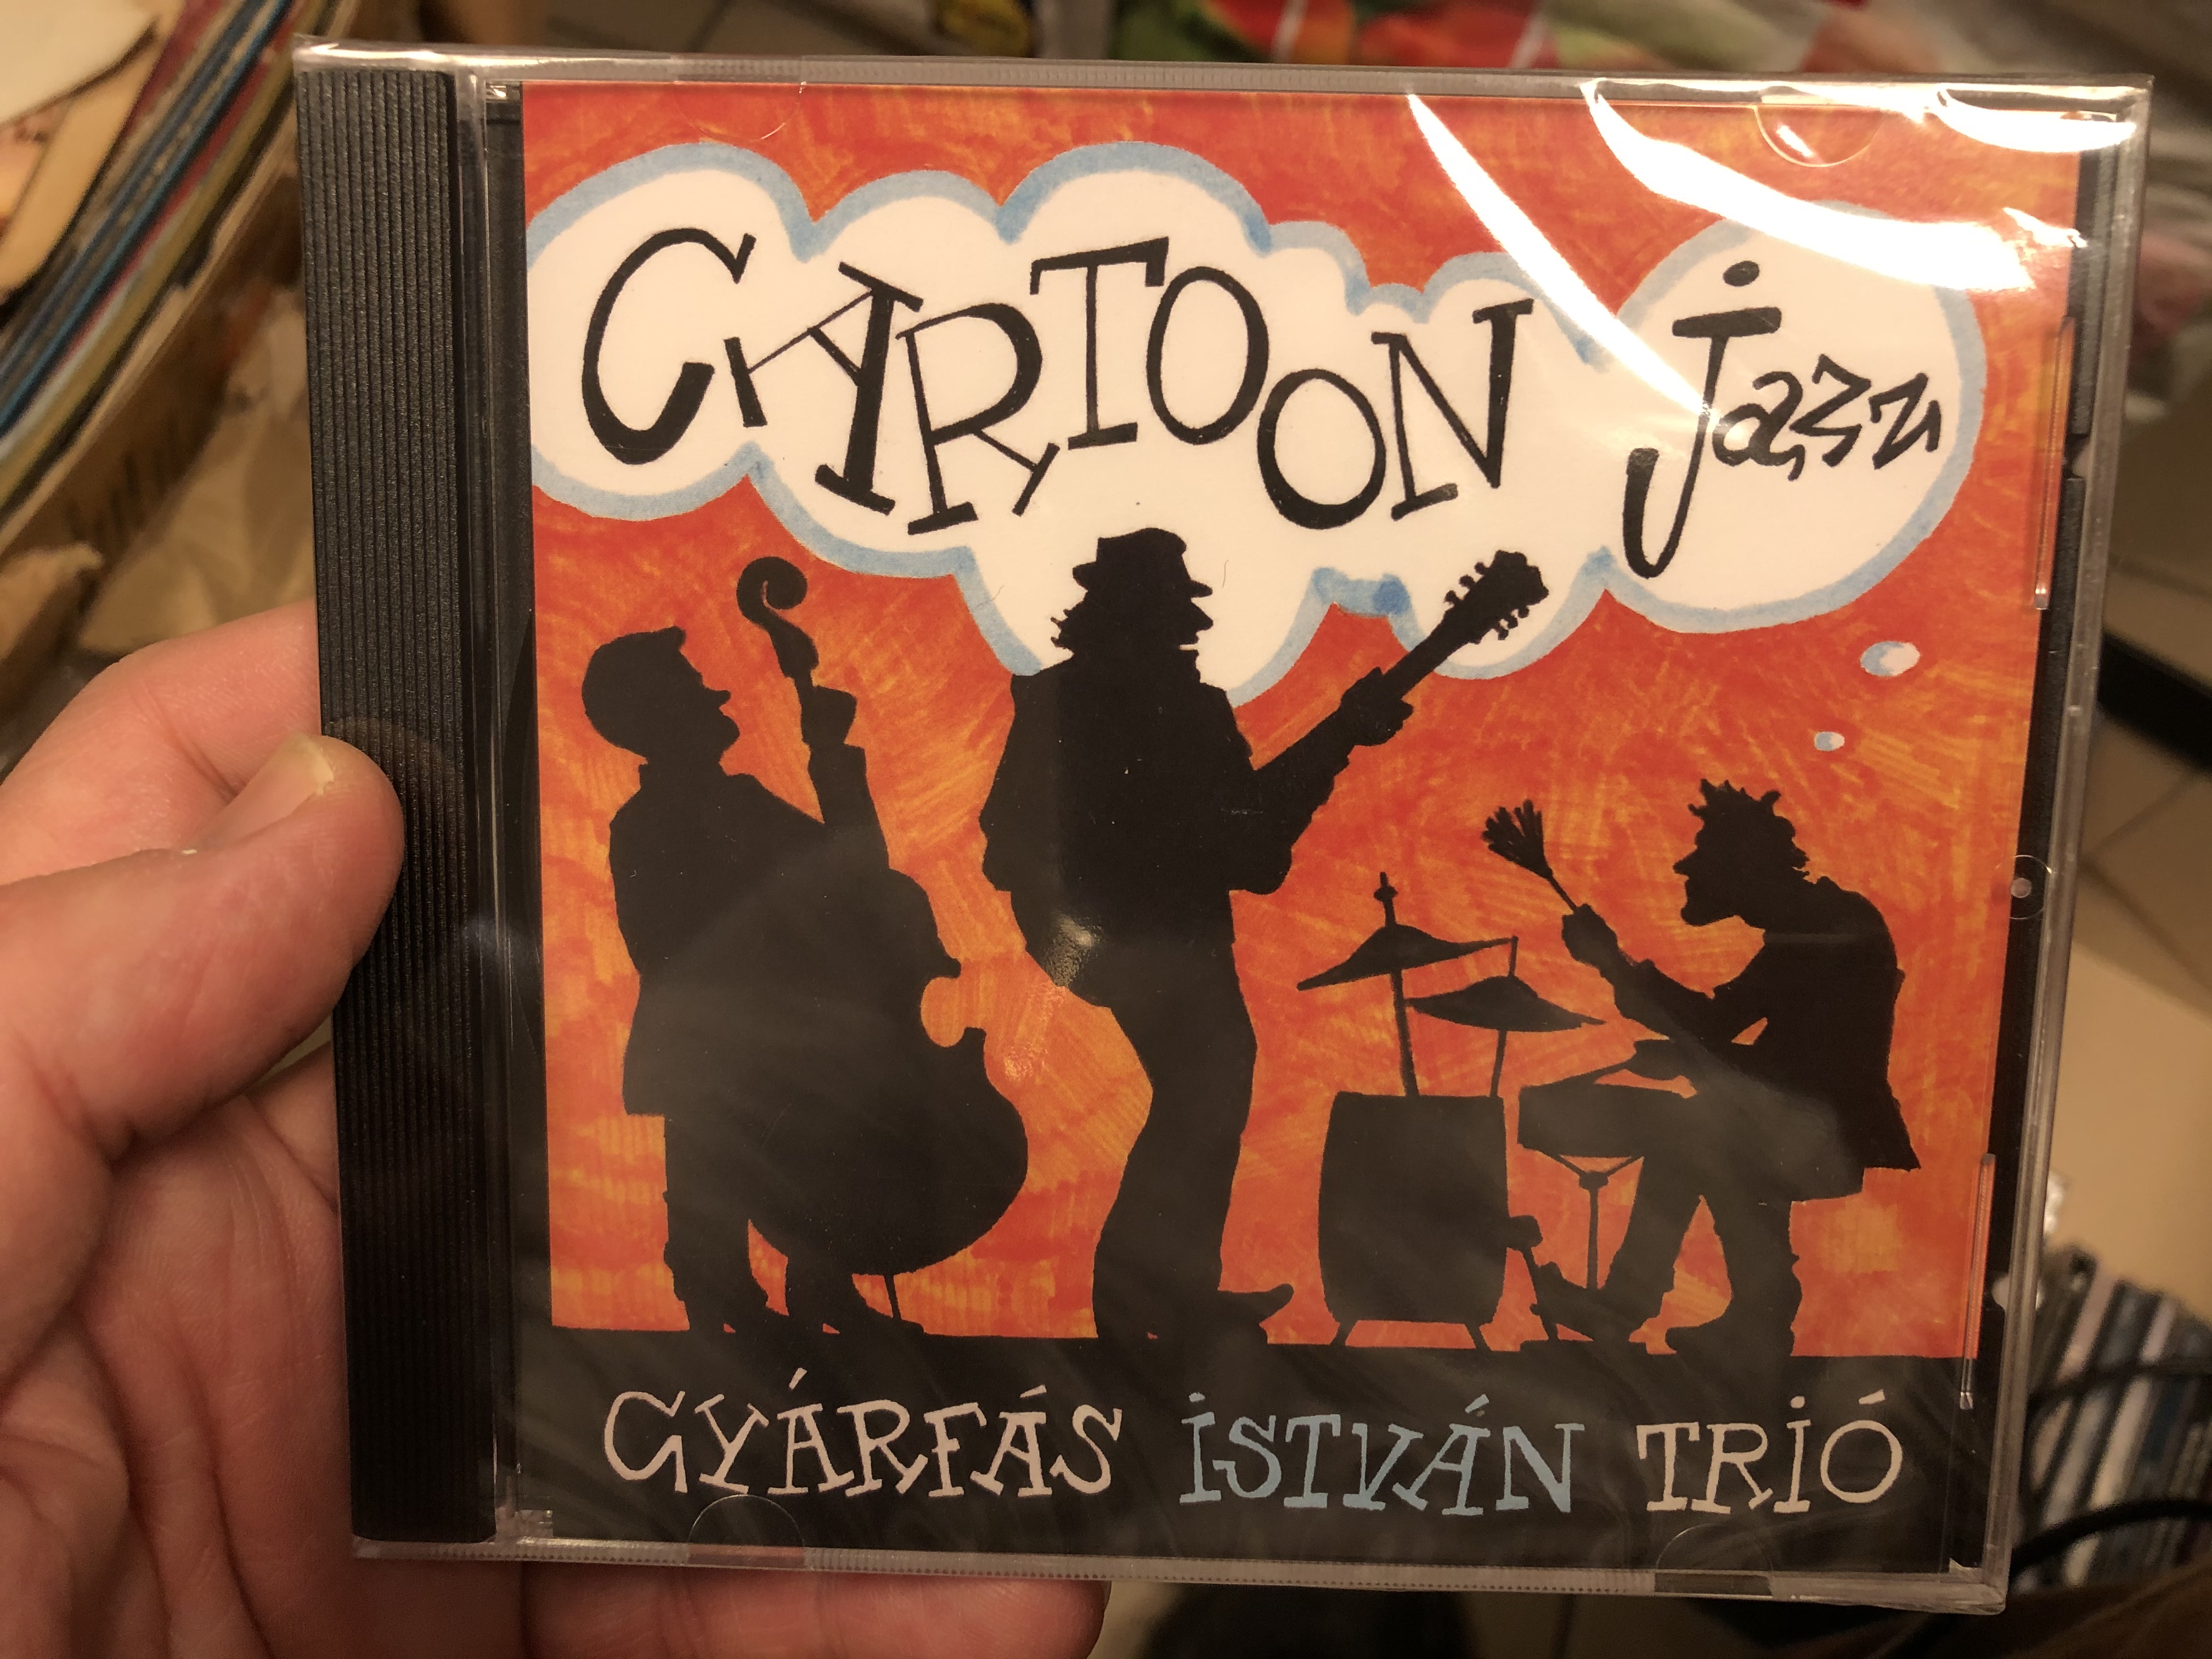 cartoon-jazz-gyarfas-istvan-trio-nemzeti-kulturalis-alap-audio-cd-5999883479933-1-.jpg